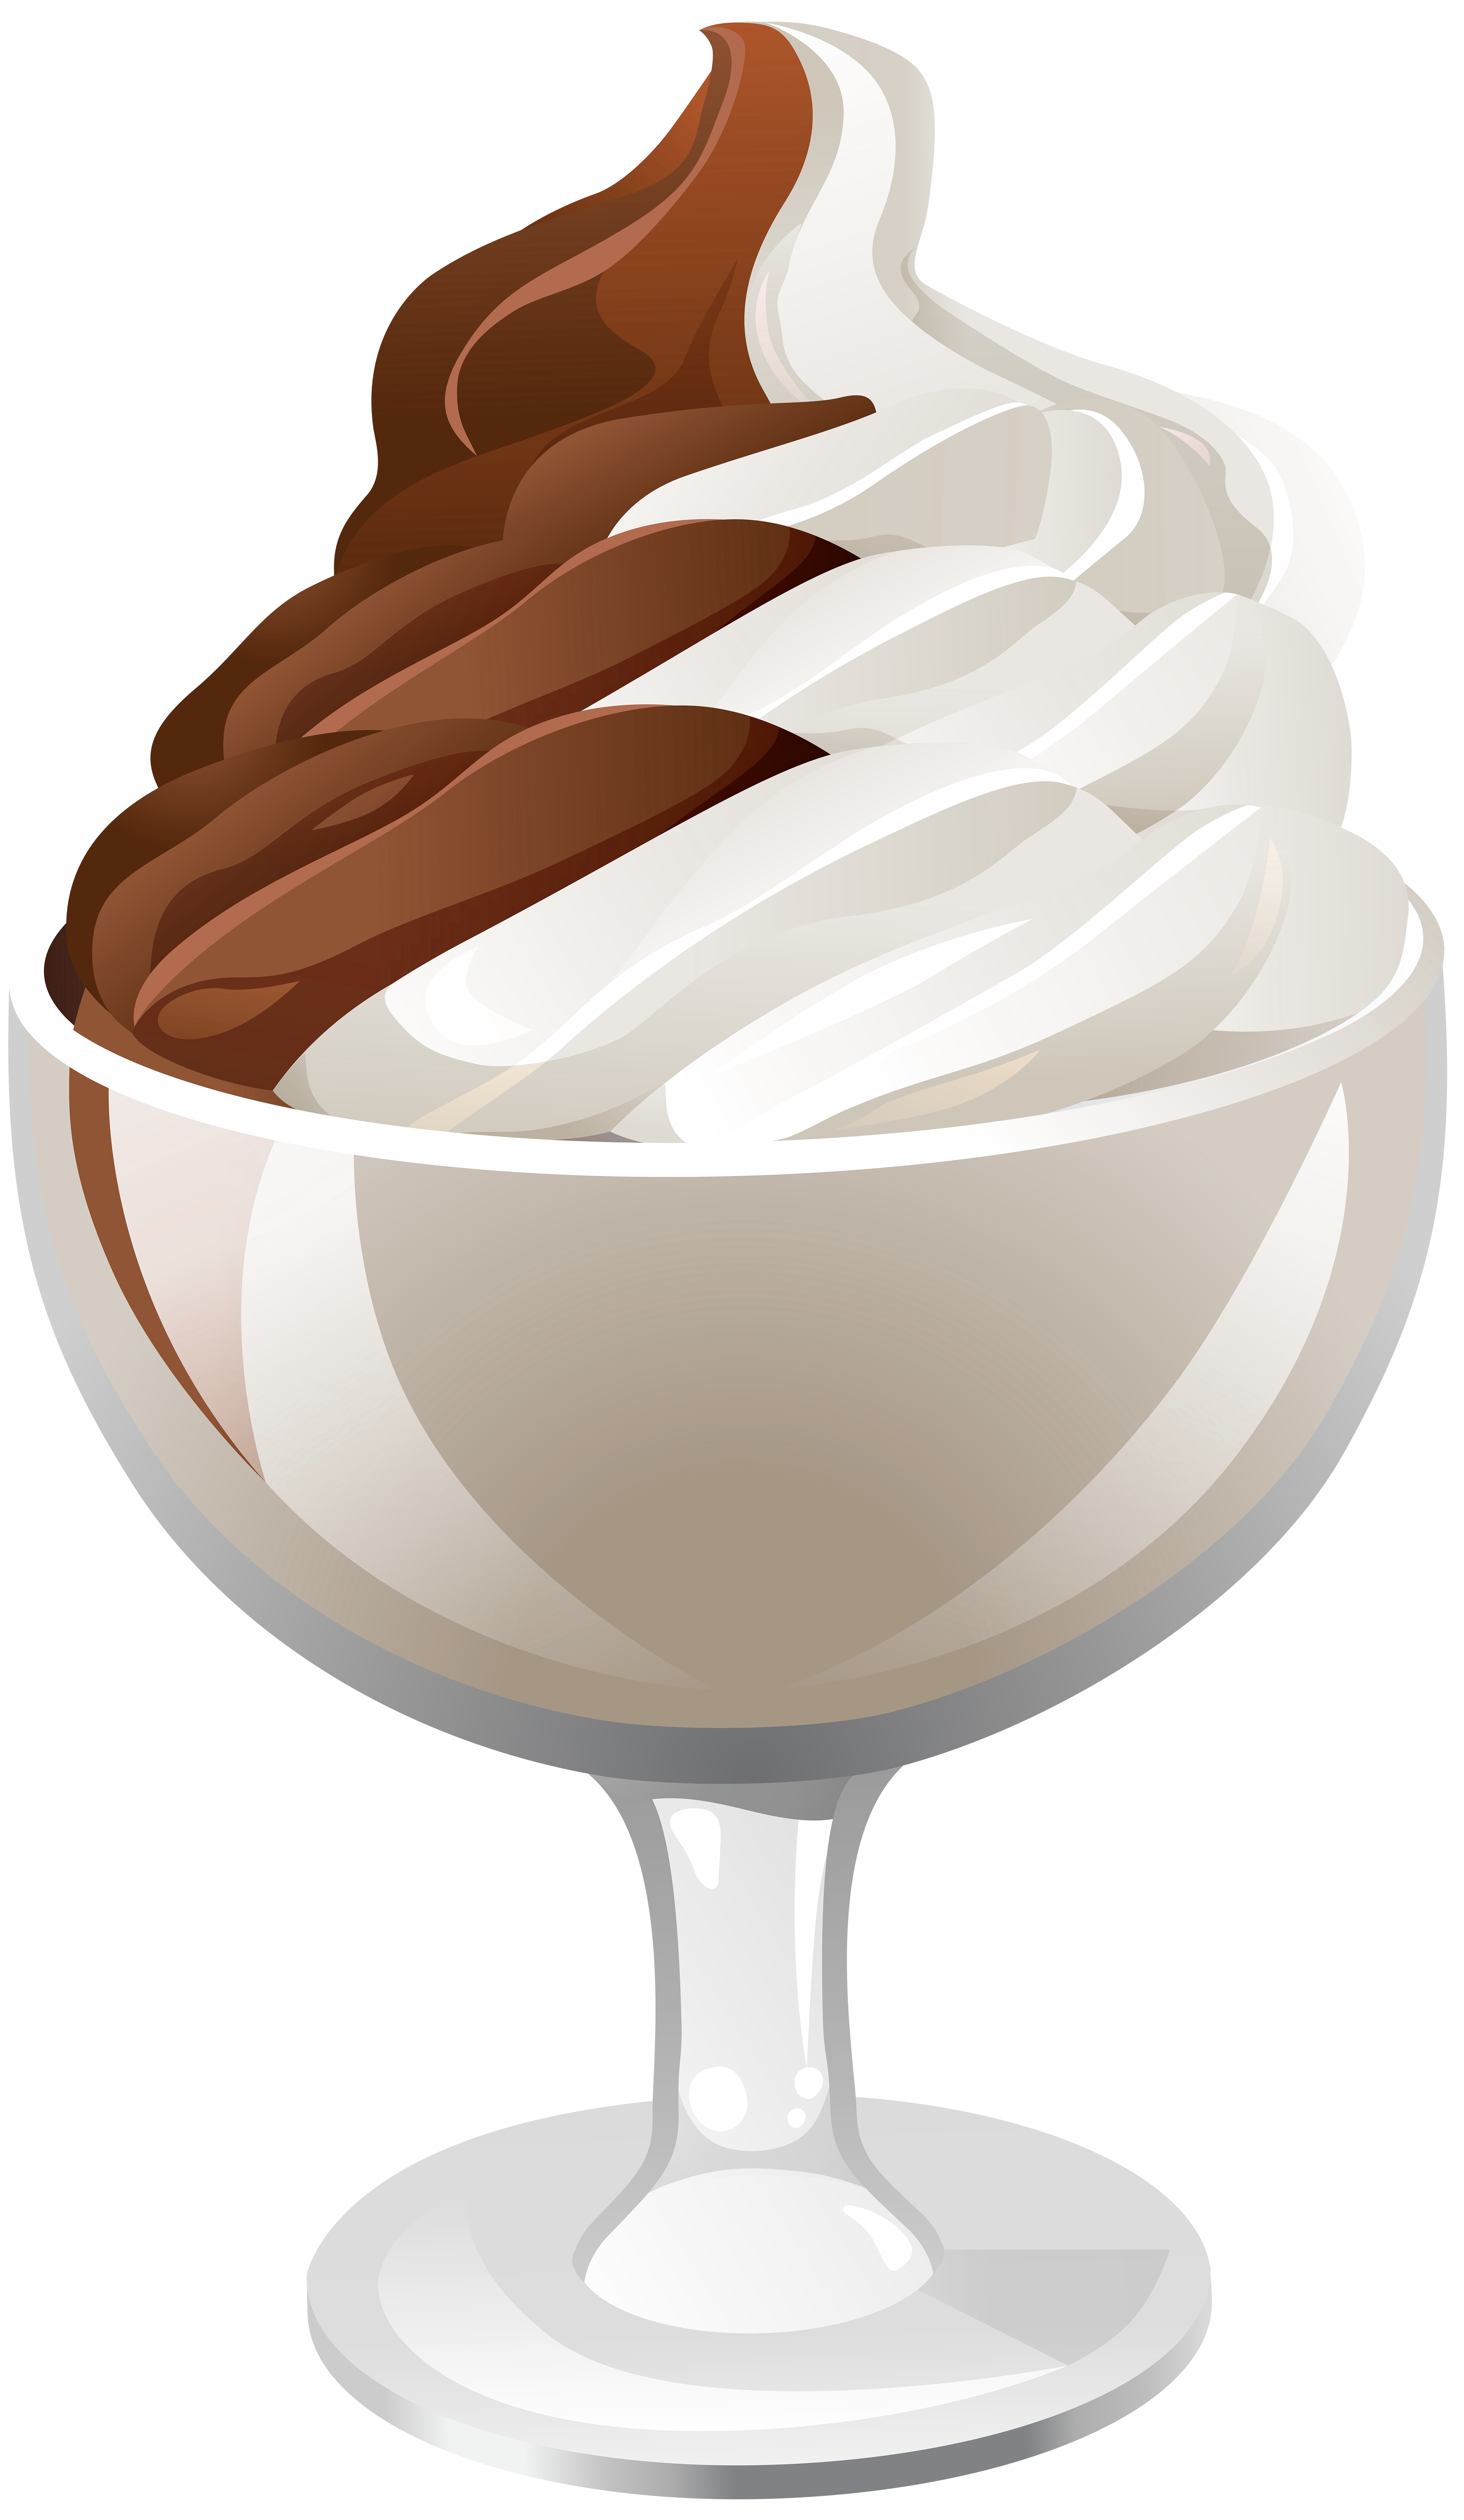 Ice cream sundae png. Yogurt clipart transparent background